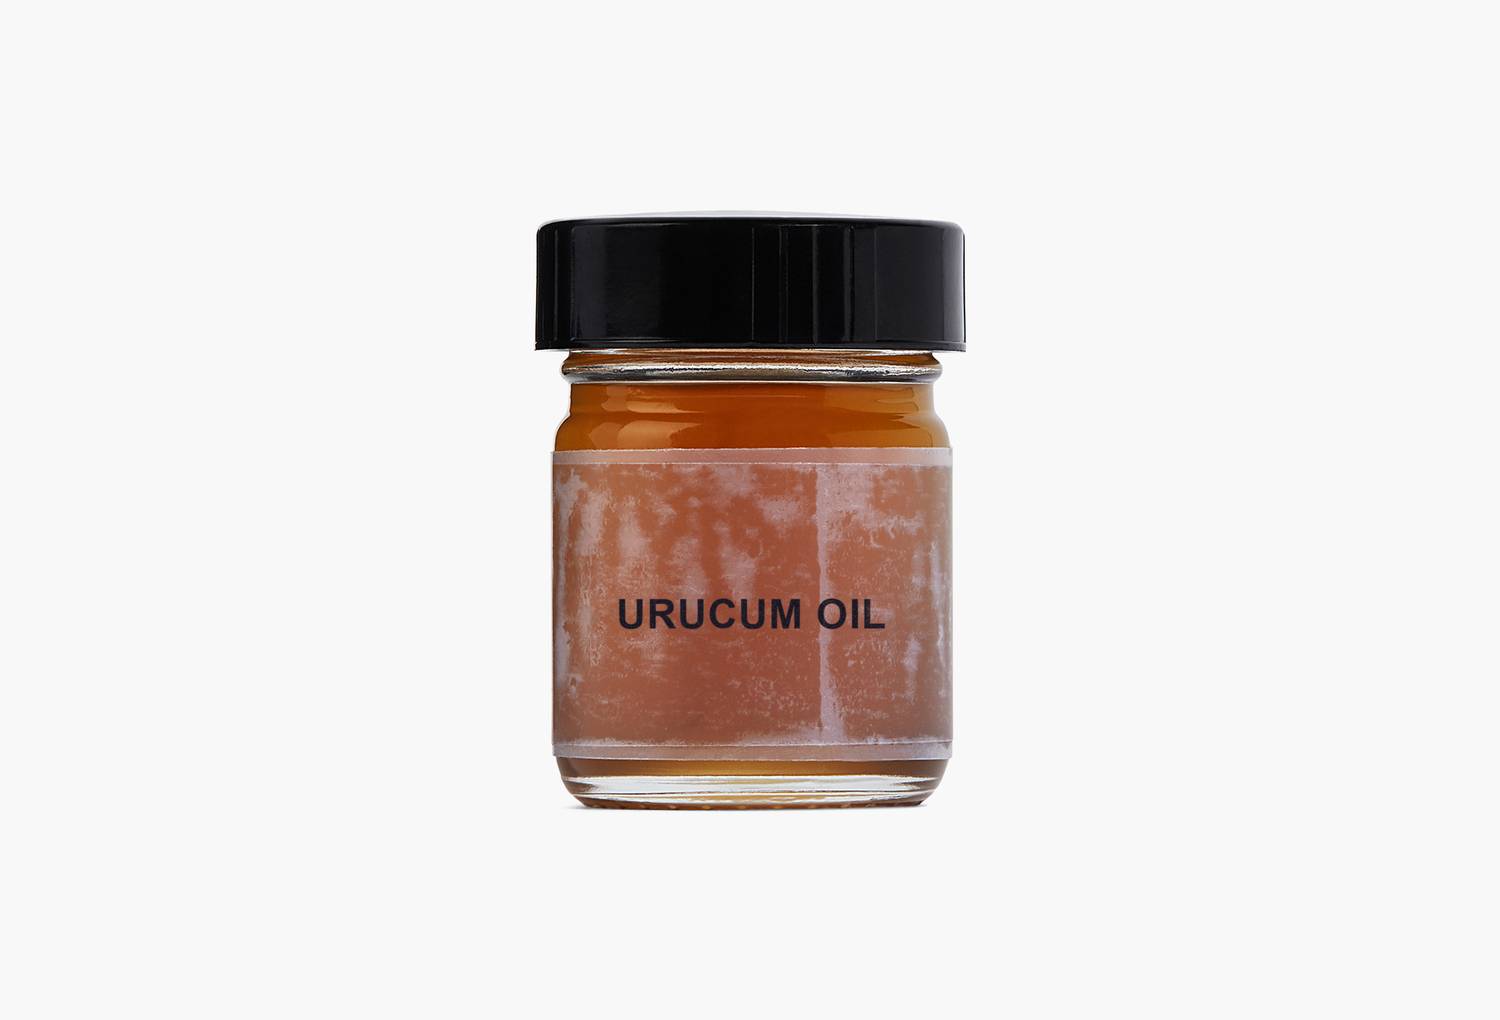 Urucum Oil in natural form